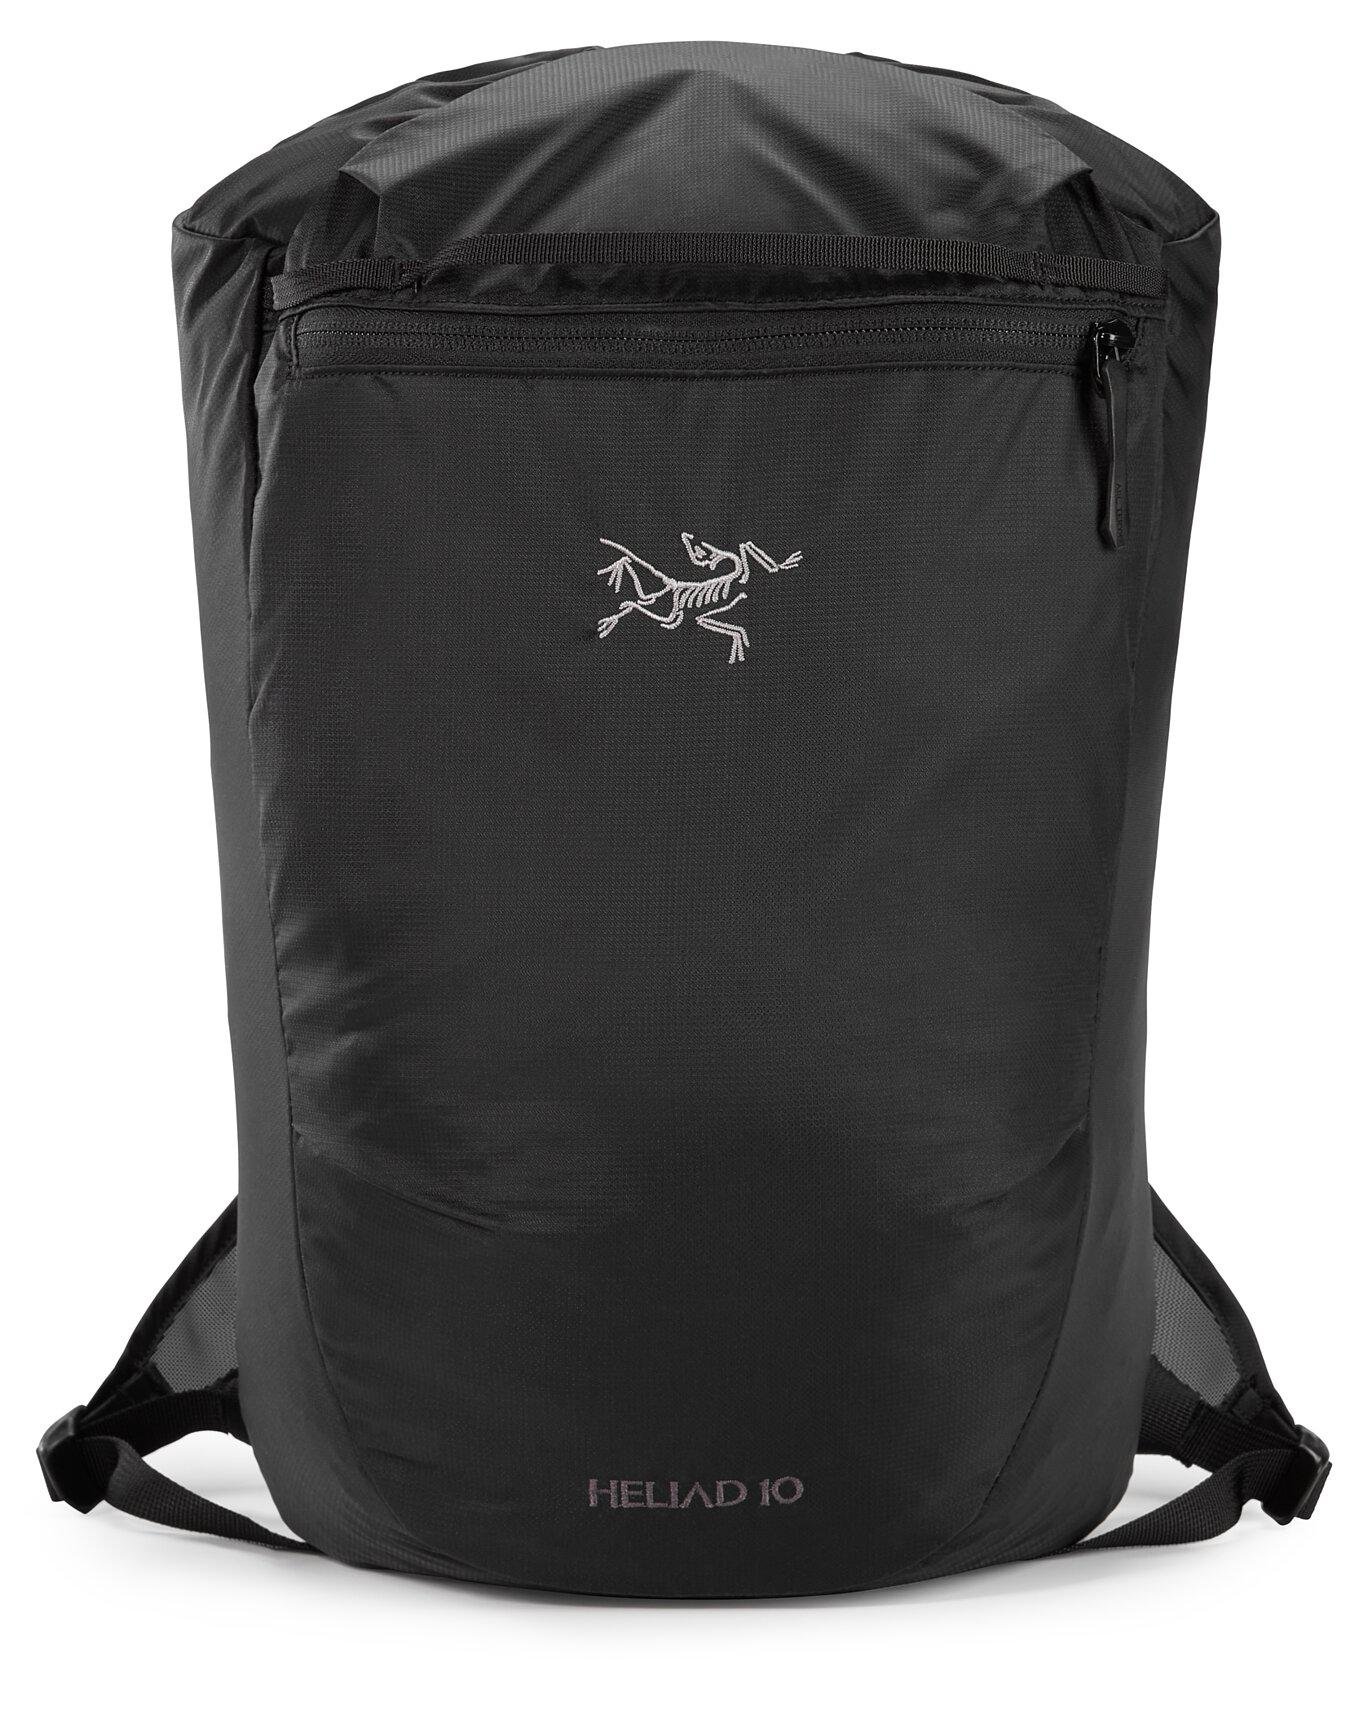 Heliad 10 Backpack by ARC'TERYX | jellibeans